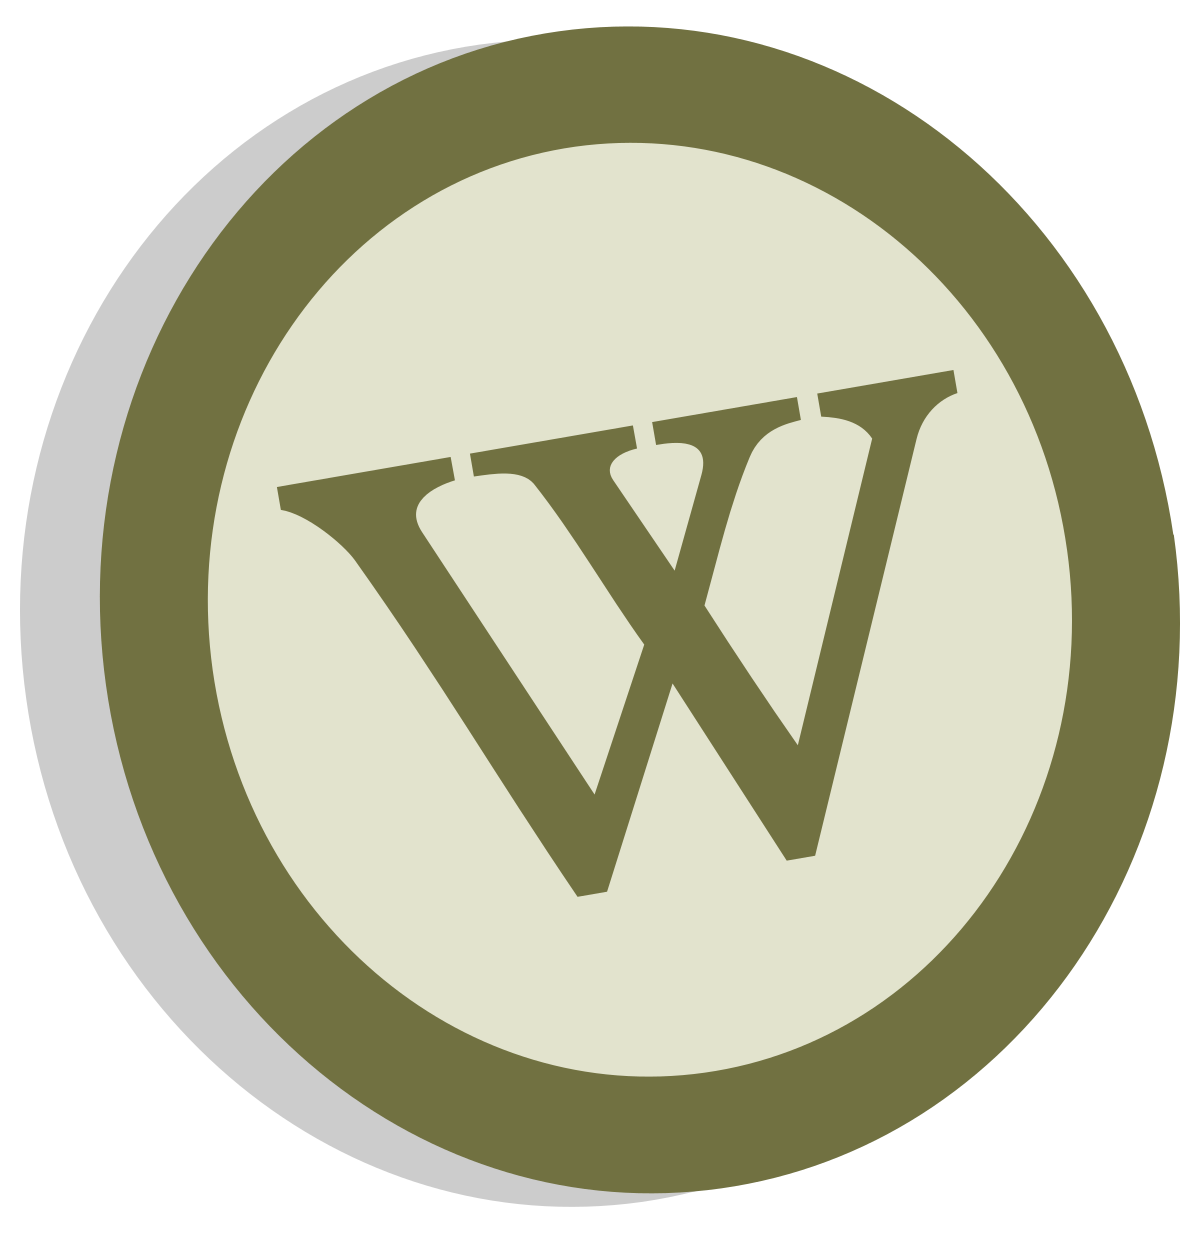 Https www wikipedia. Wikipedia логотип. Иконка Wiki. Википедия эмблема. Вик логотип.